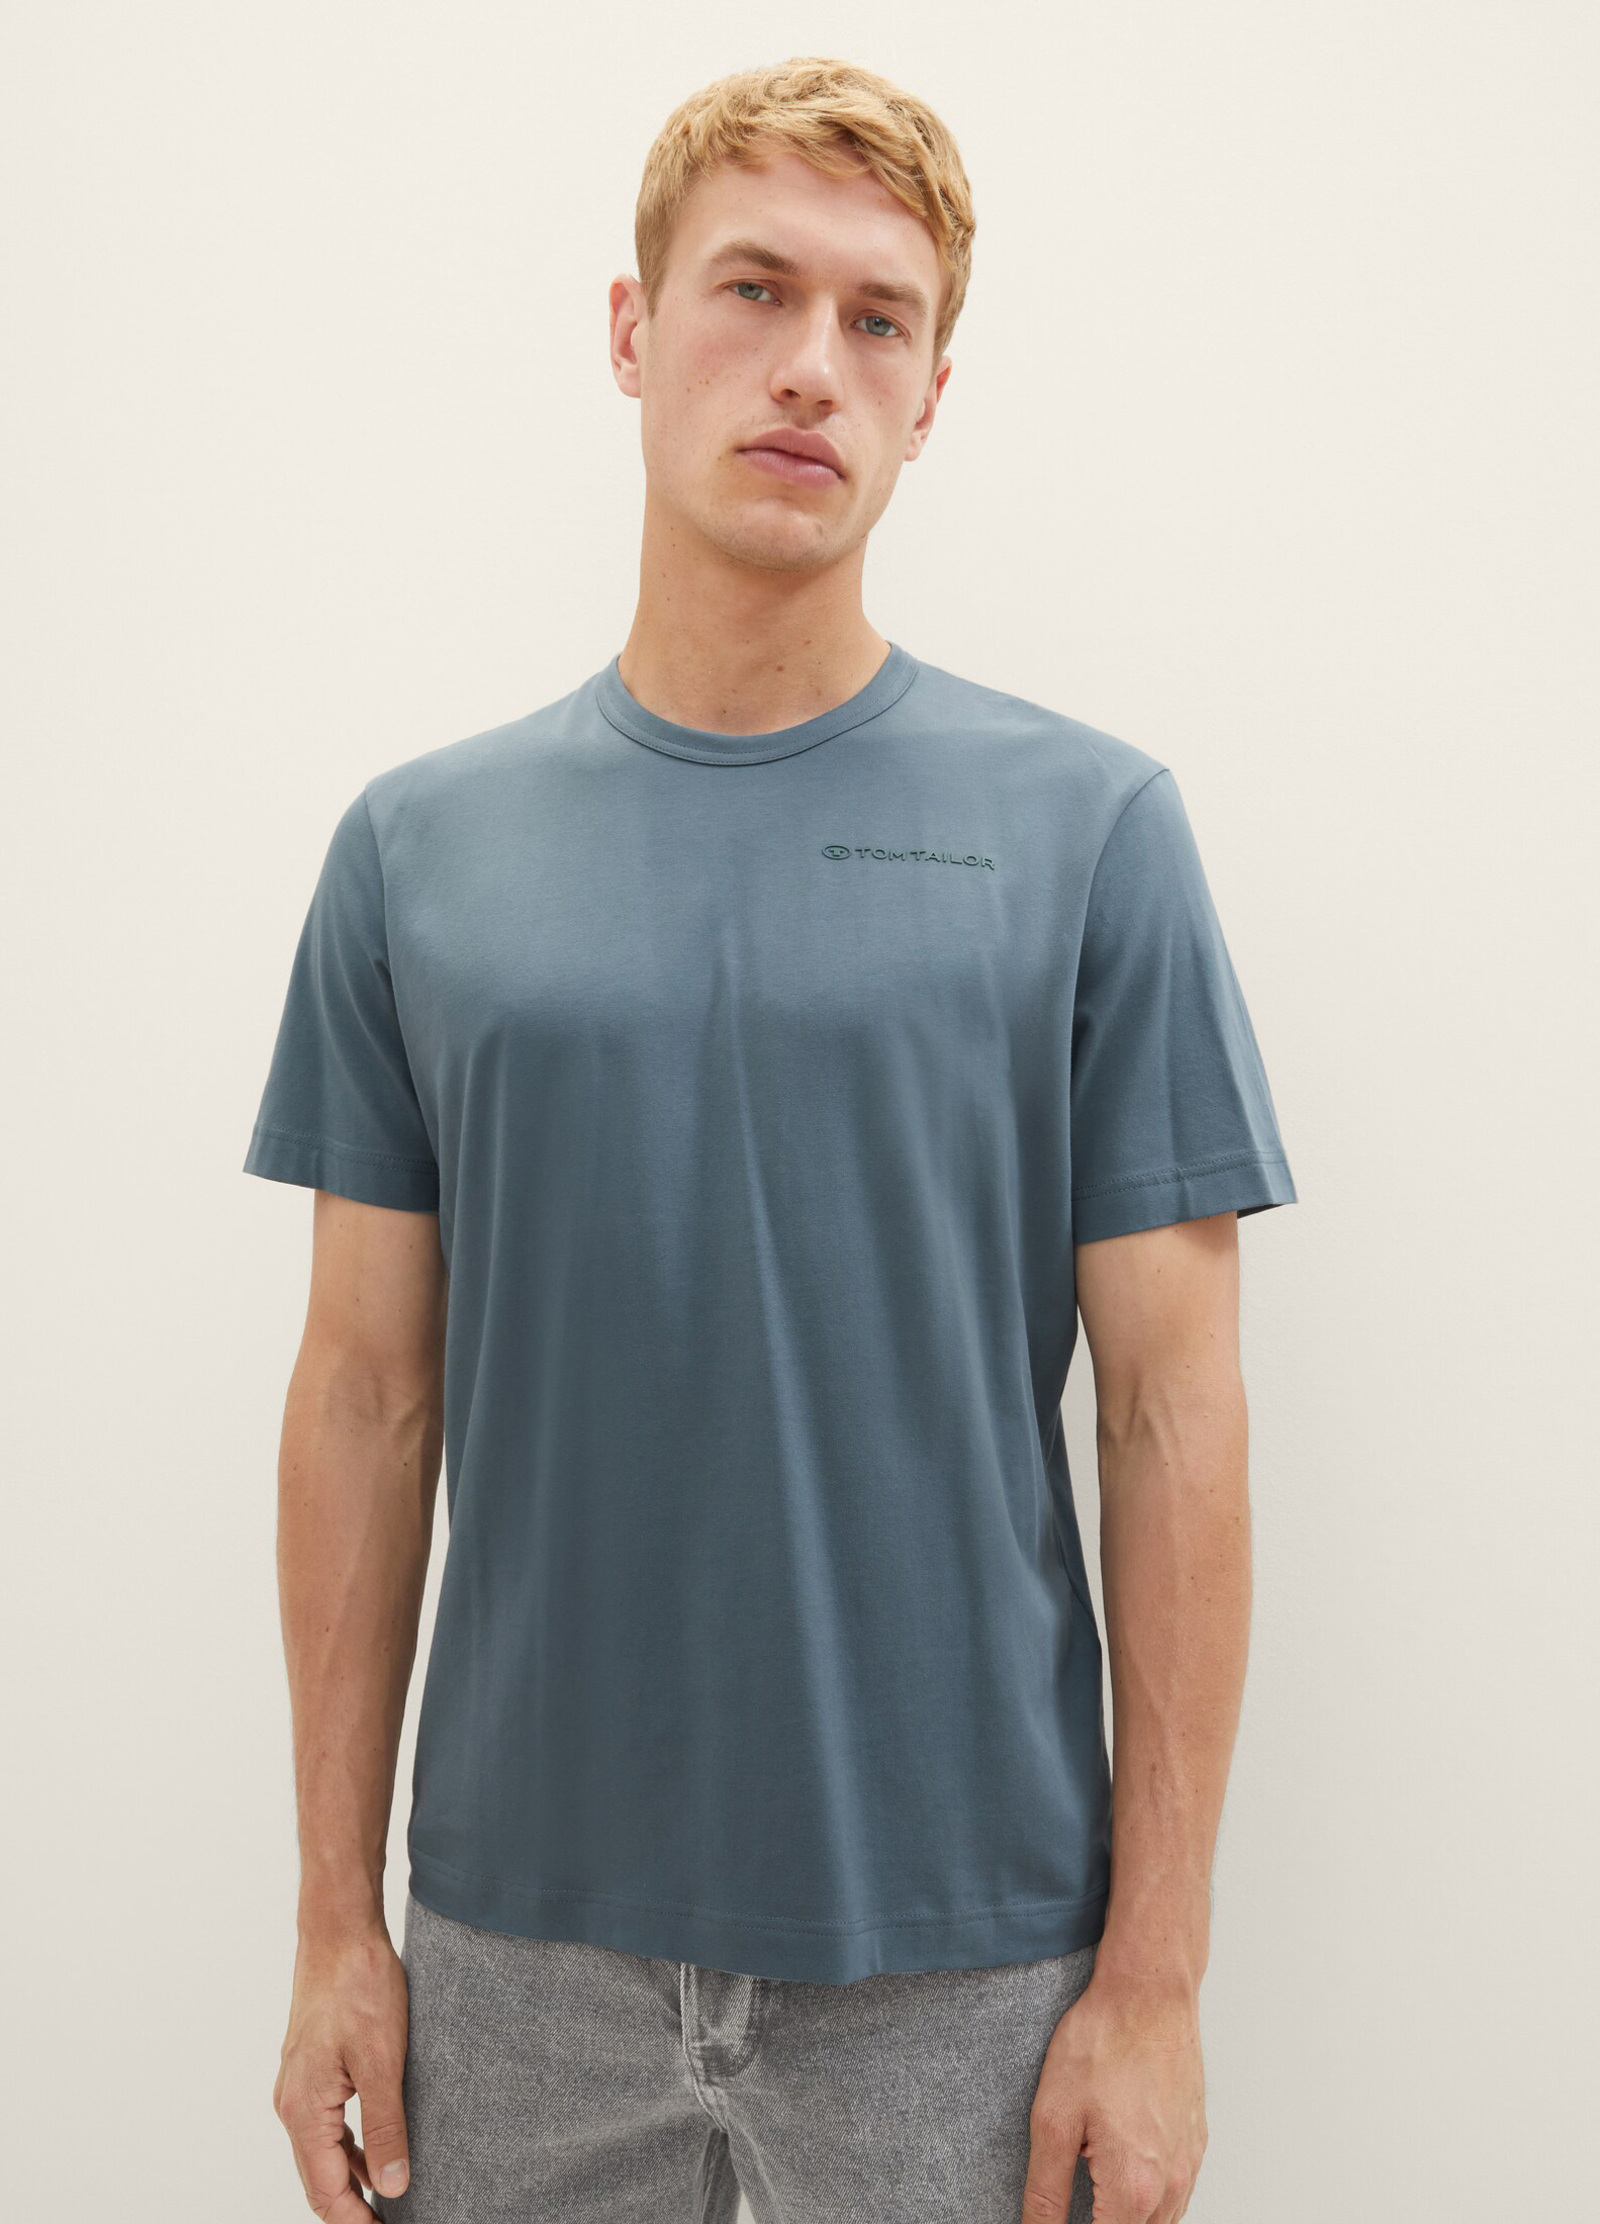 L Dusty Tailor® Tom Teal Basic - T-shirt Dark Size